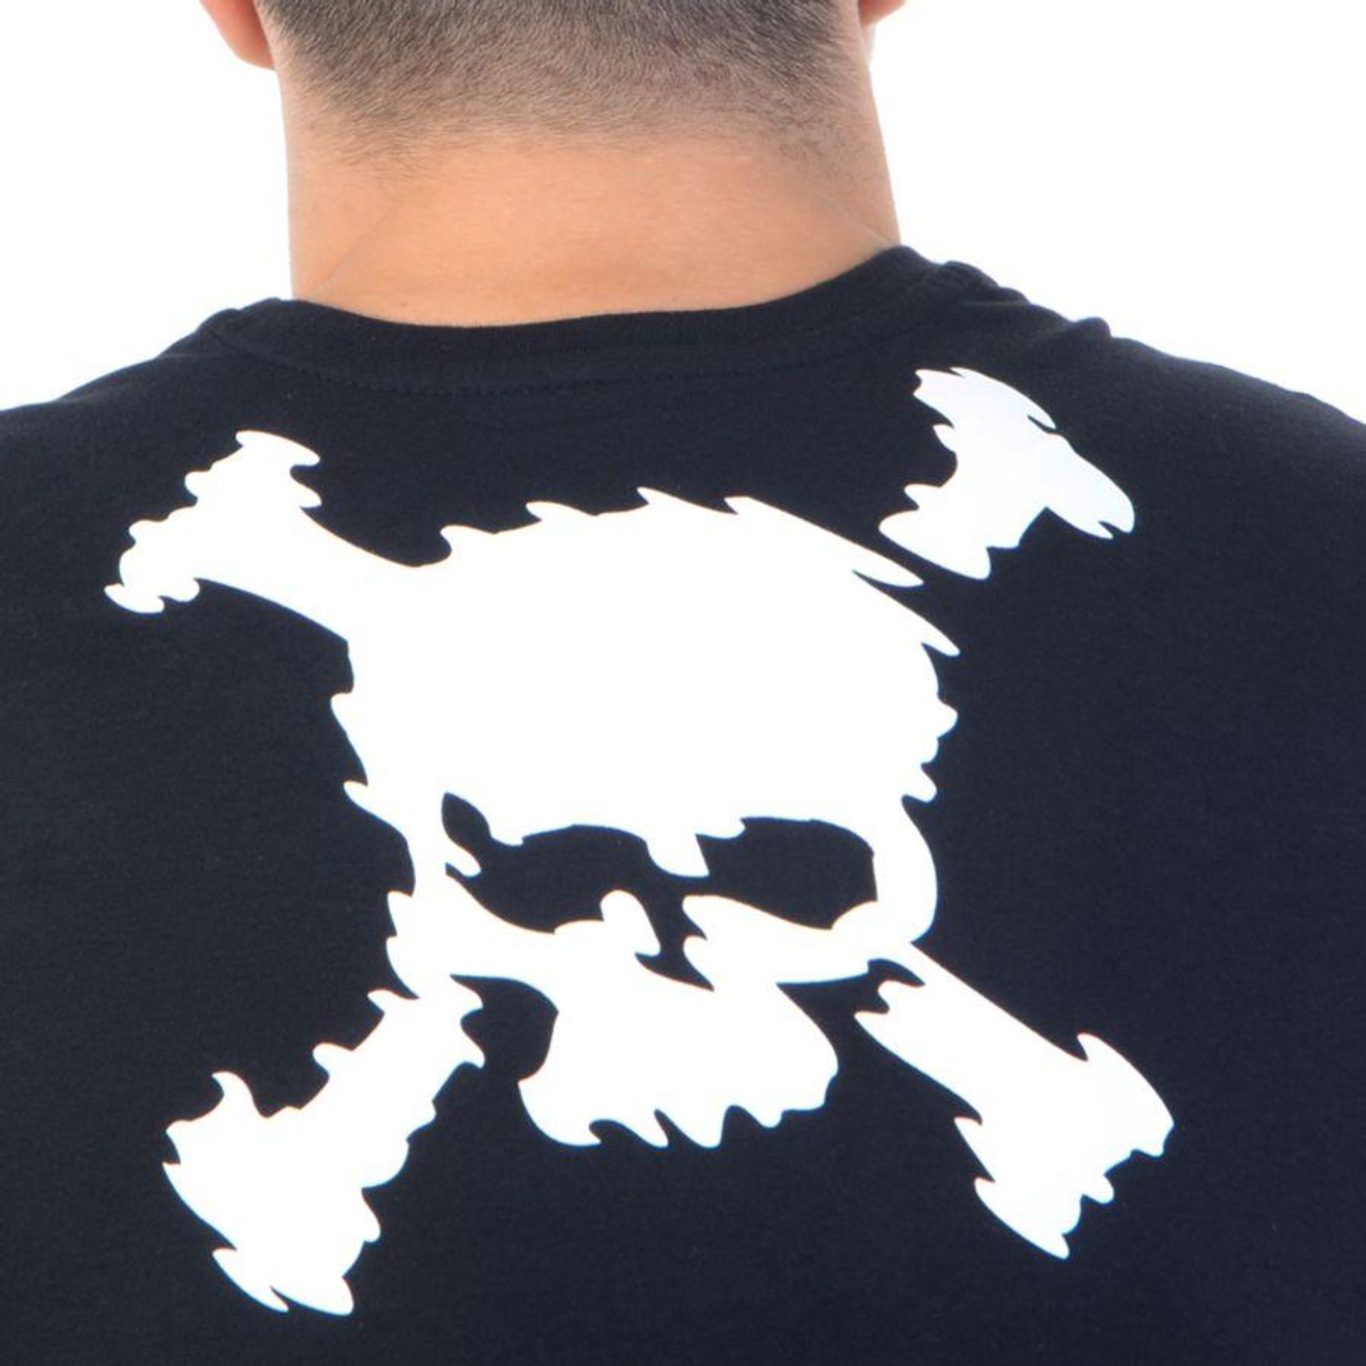 Camiseta Oakley Heritage Skull - - Masculina em Promoção